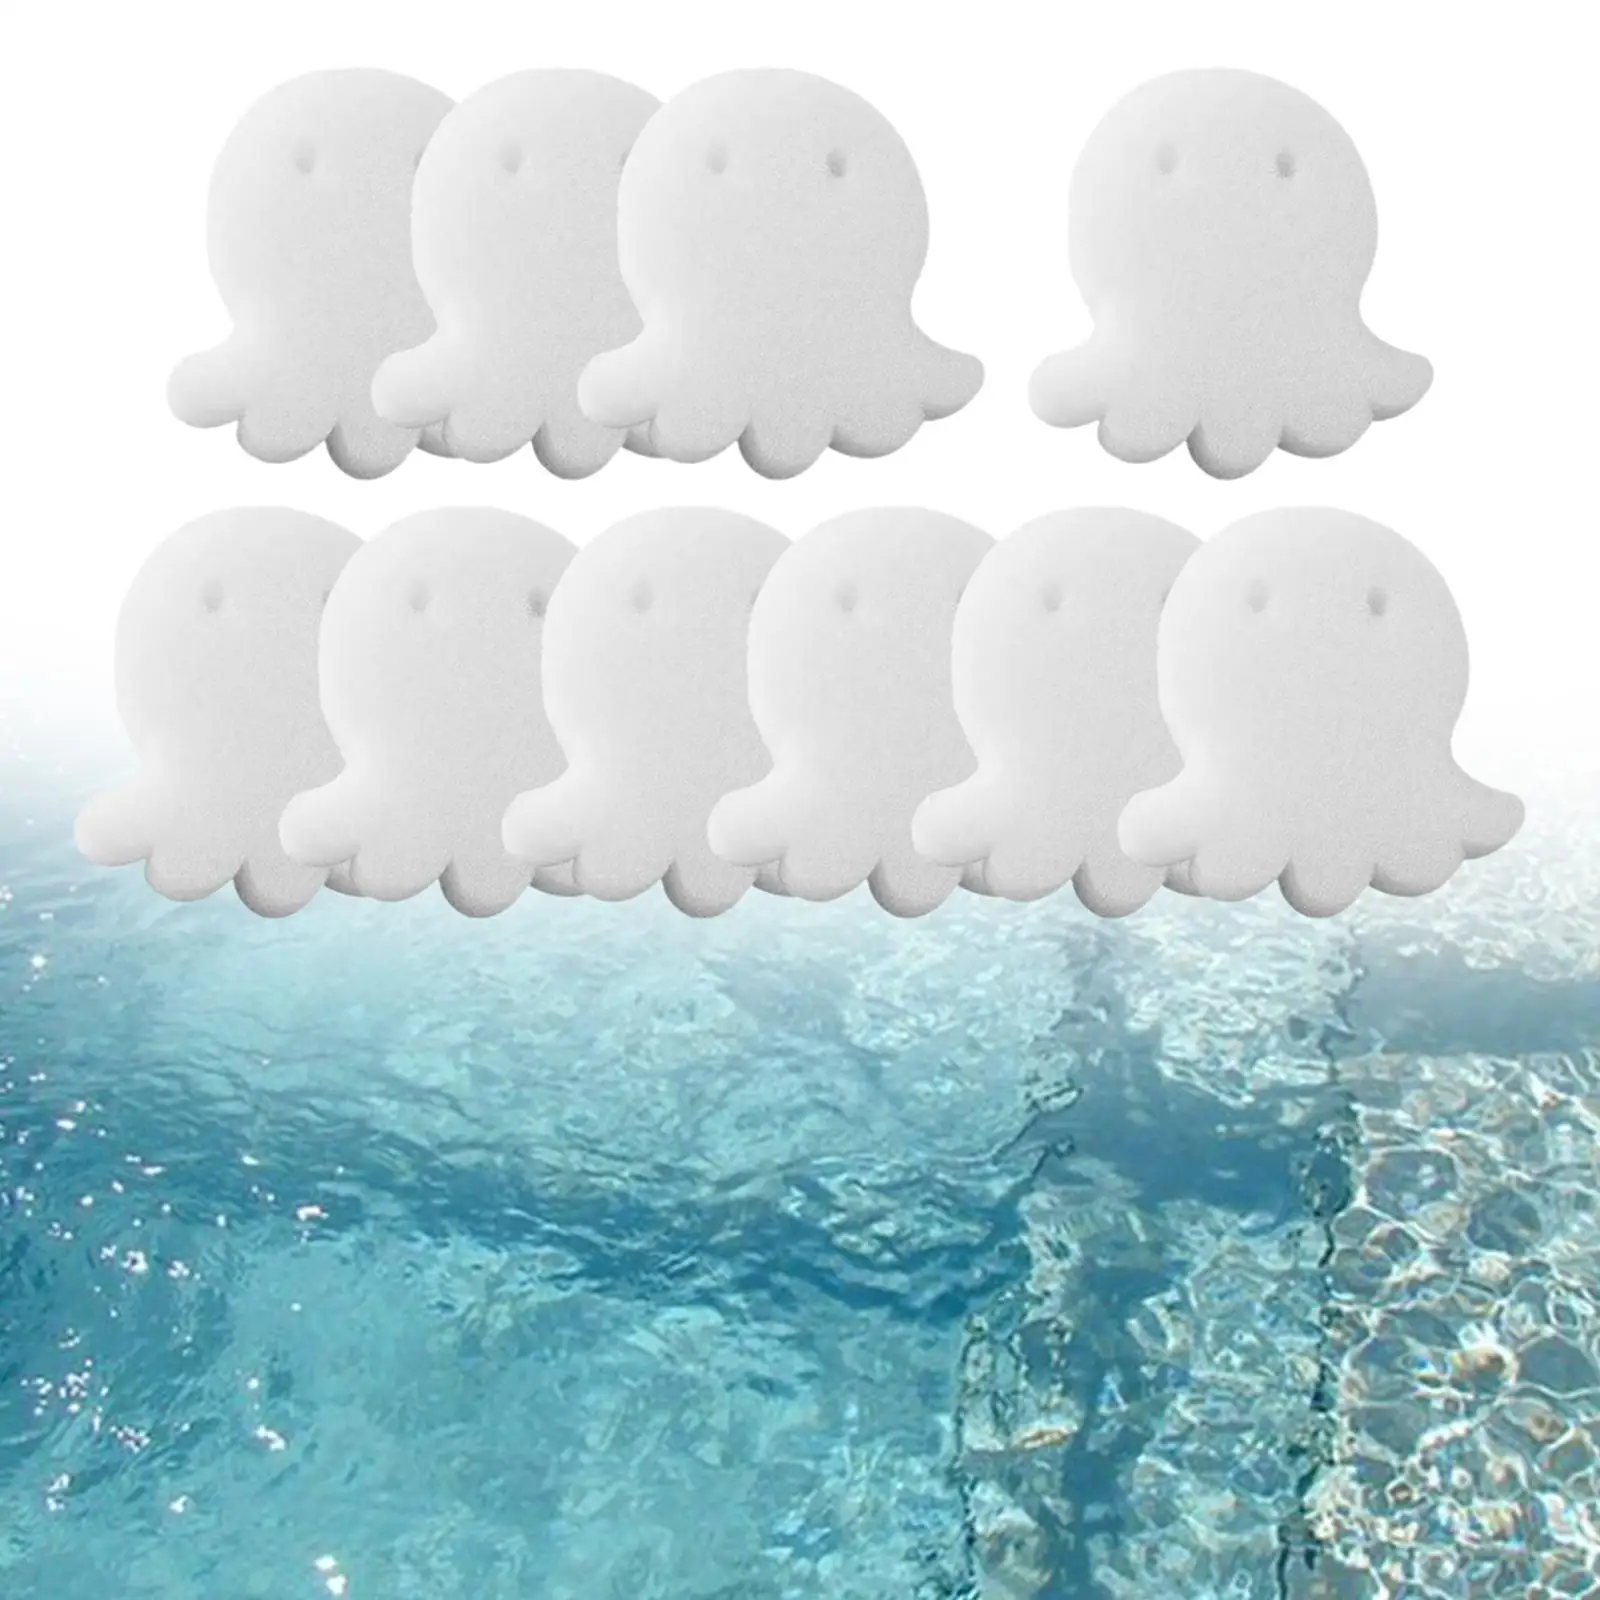 10 Pieces Oil Absorbing Scum Sponge Reusable Cartoon Octopus Filter Sponge Floating Sponges for Swimming Pool SPA Bathtub White